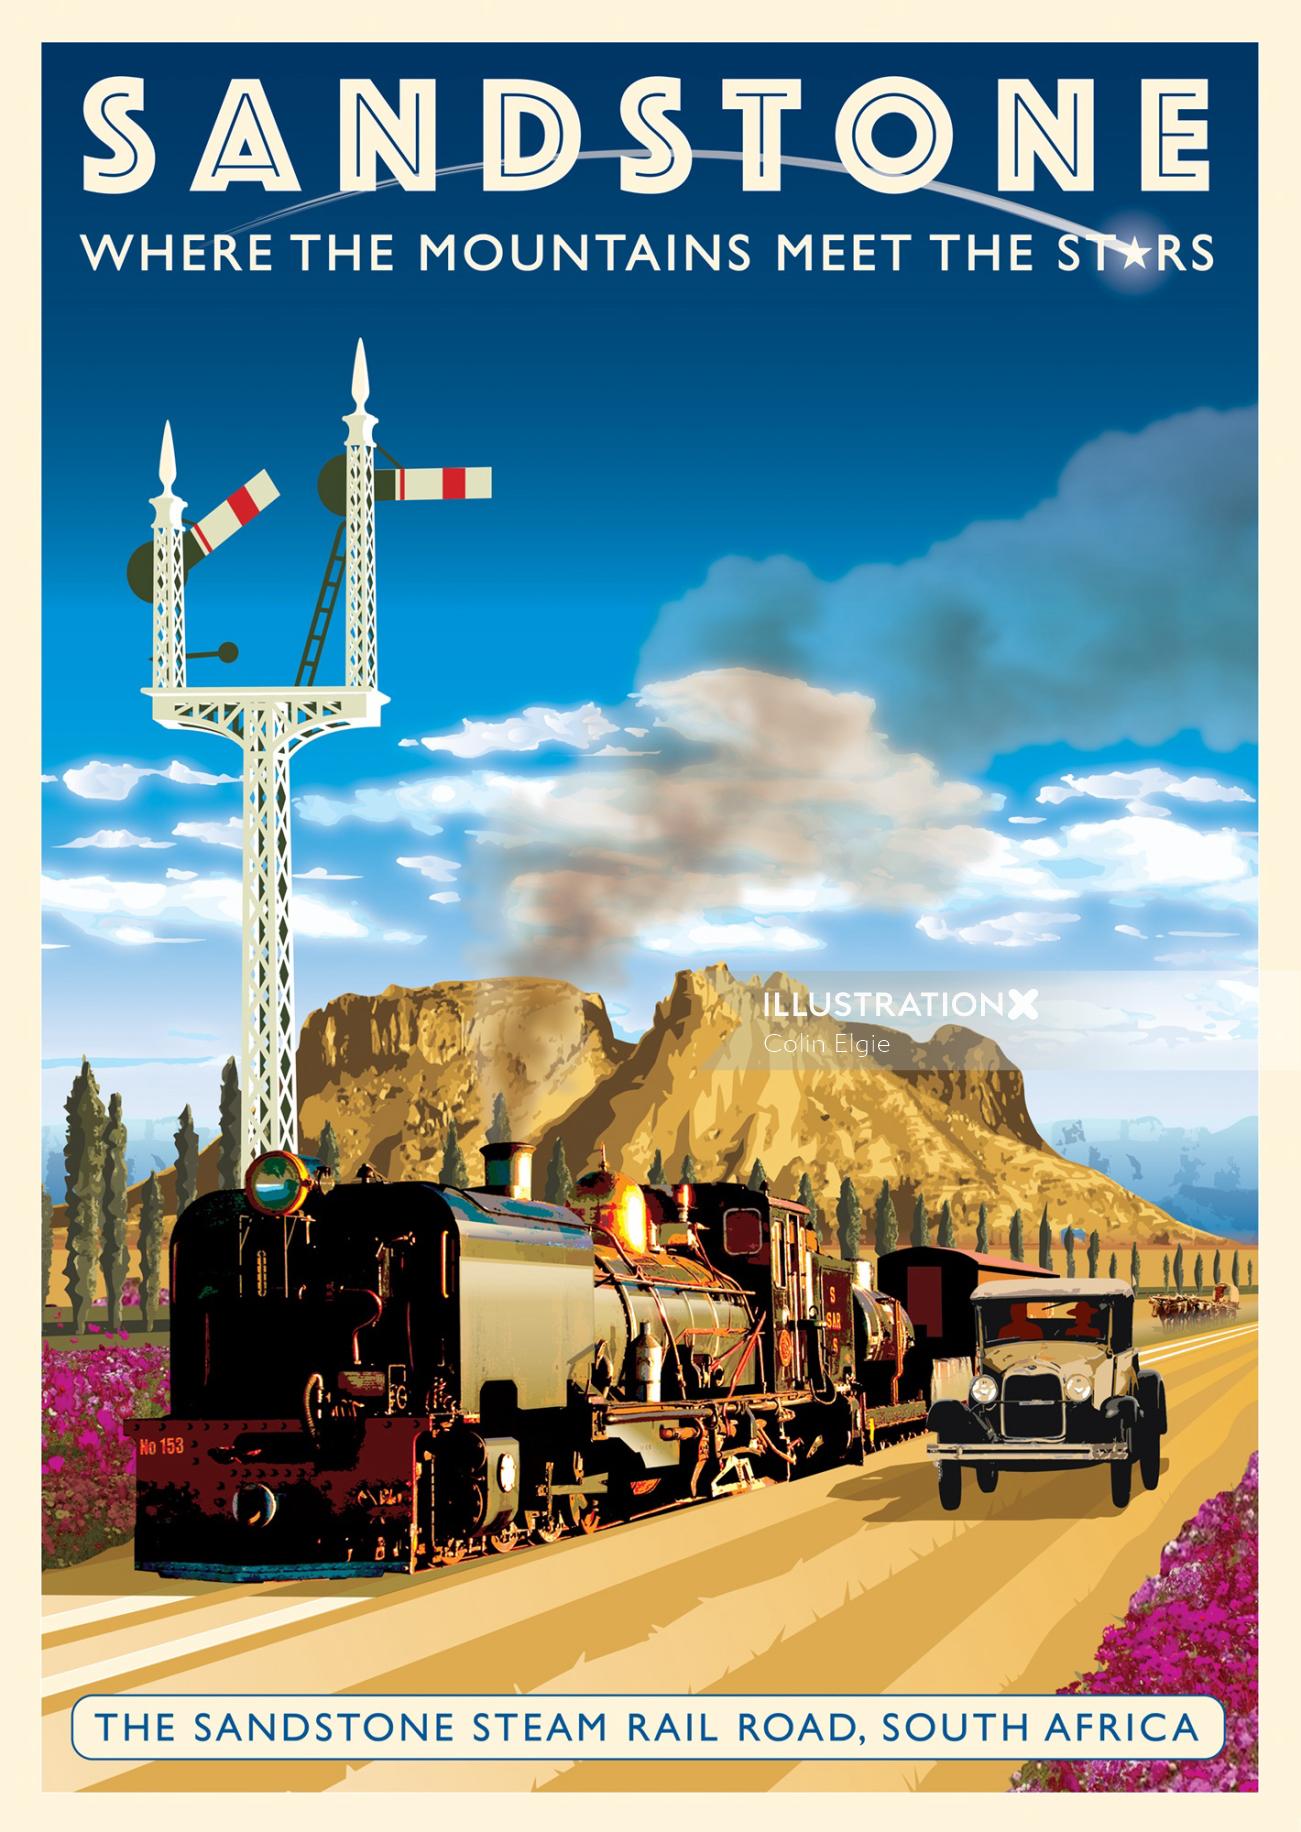 A poster for Sandstone Steam Railroad